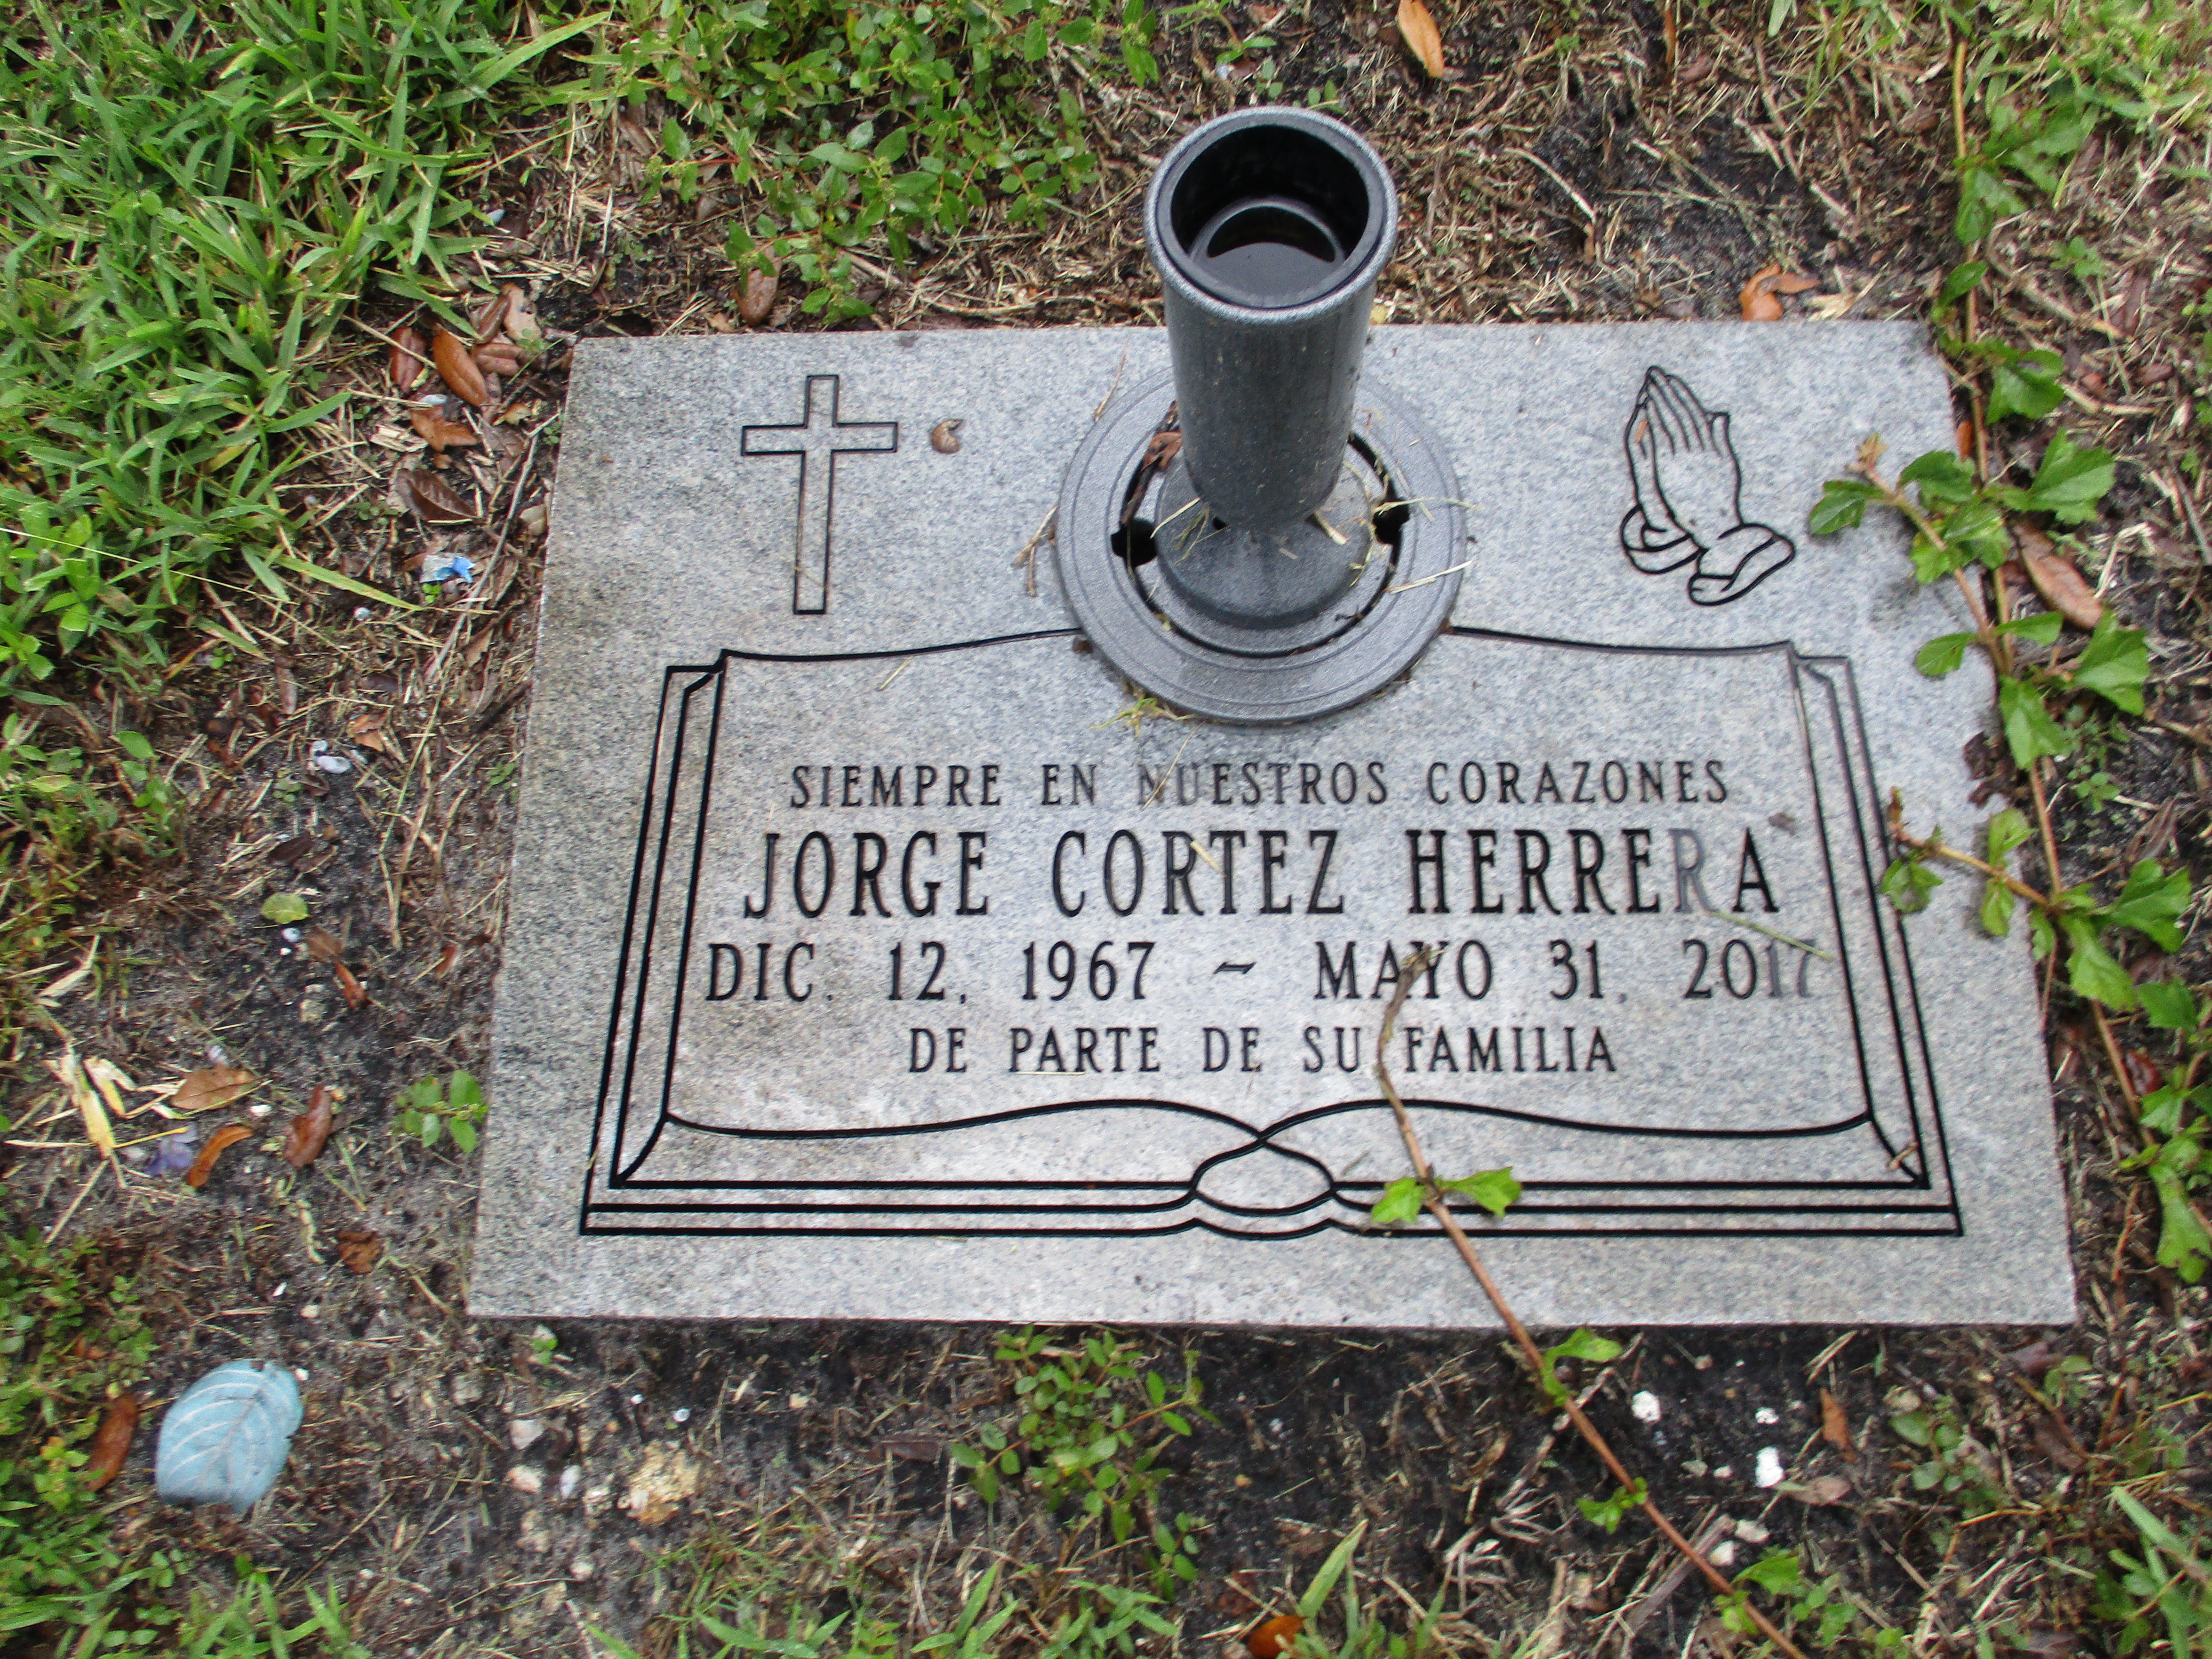 Jorge Cortez Herrera